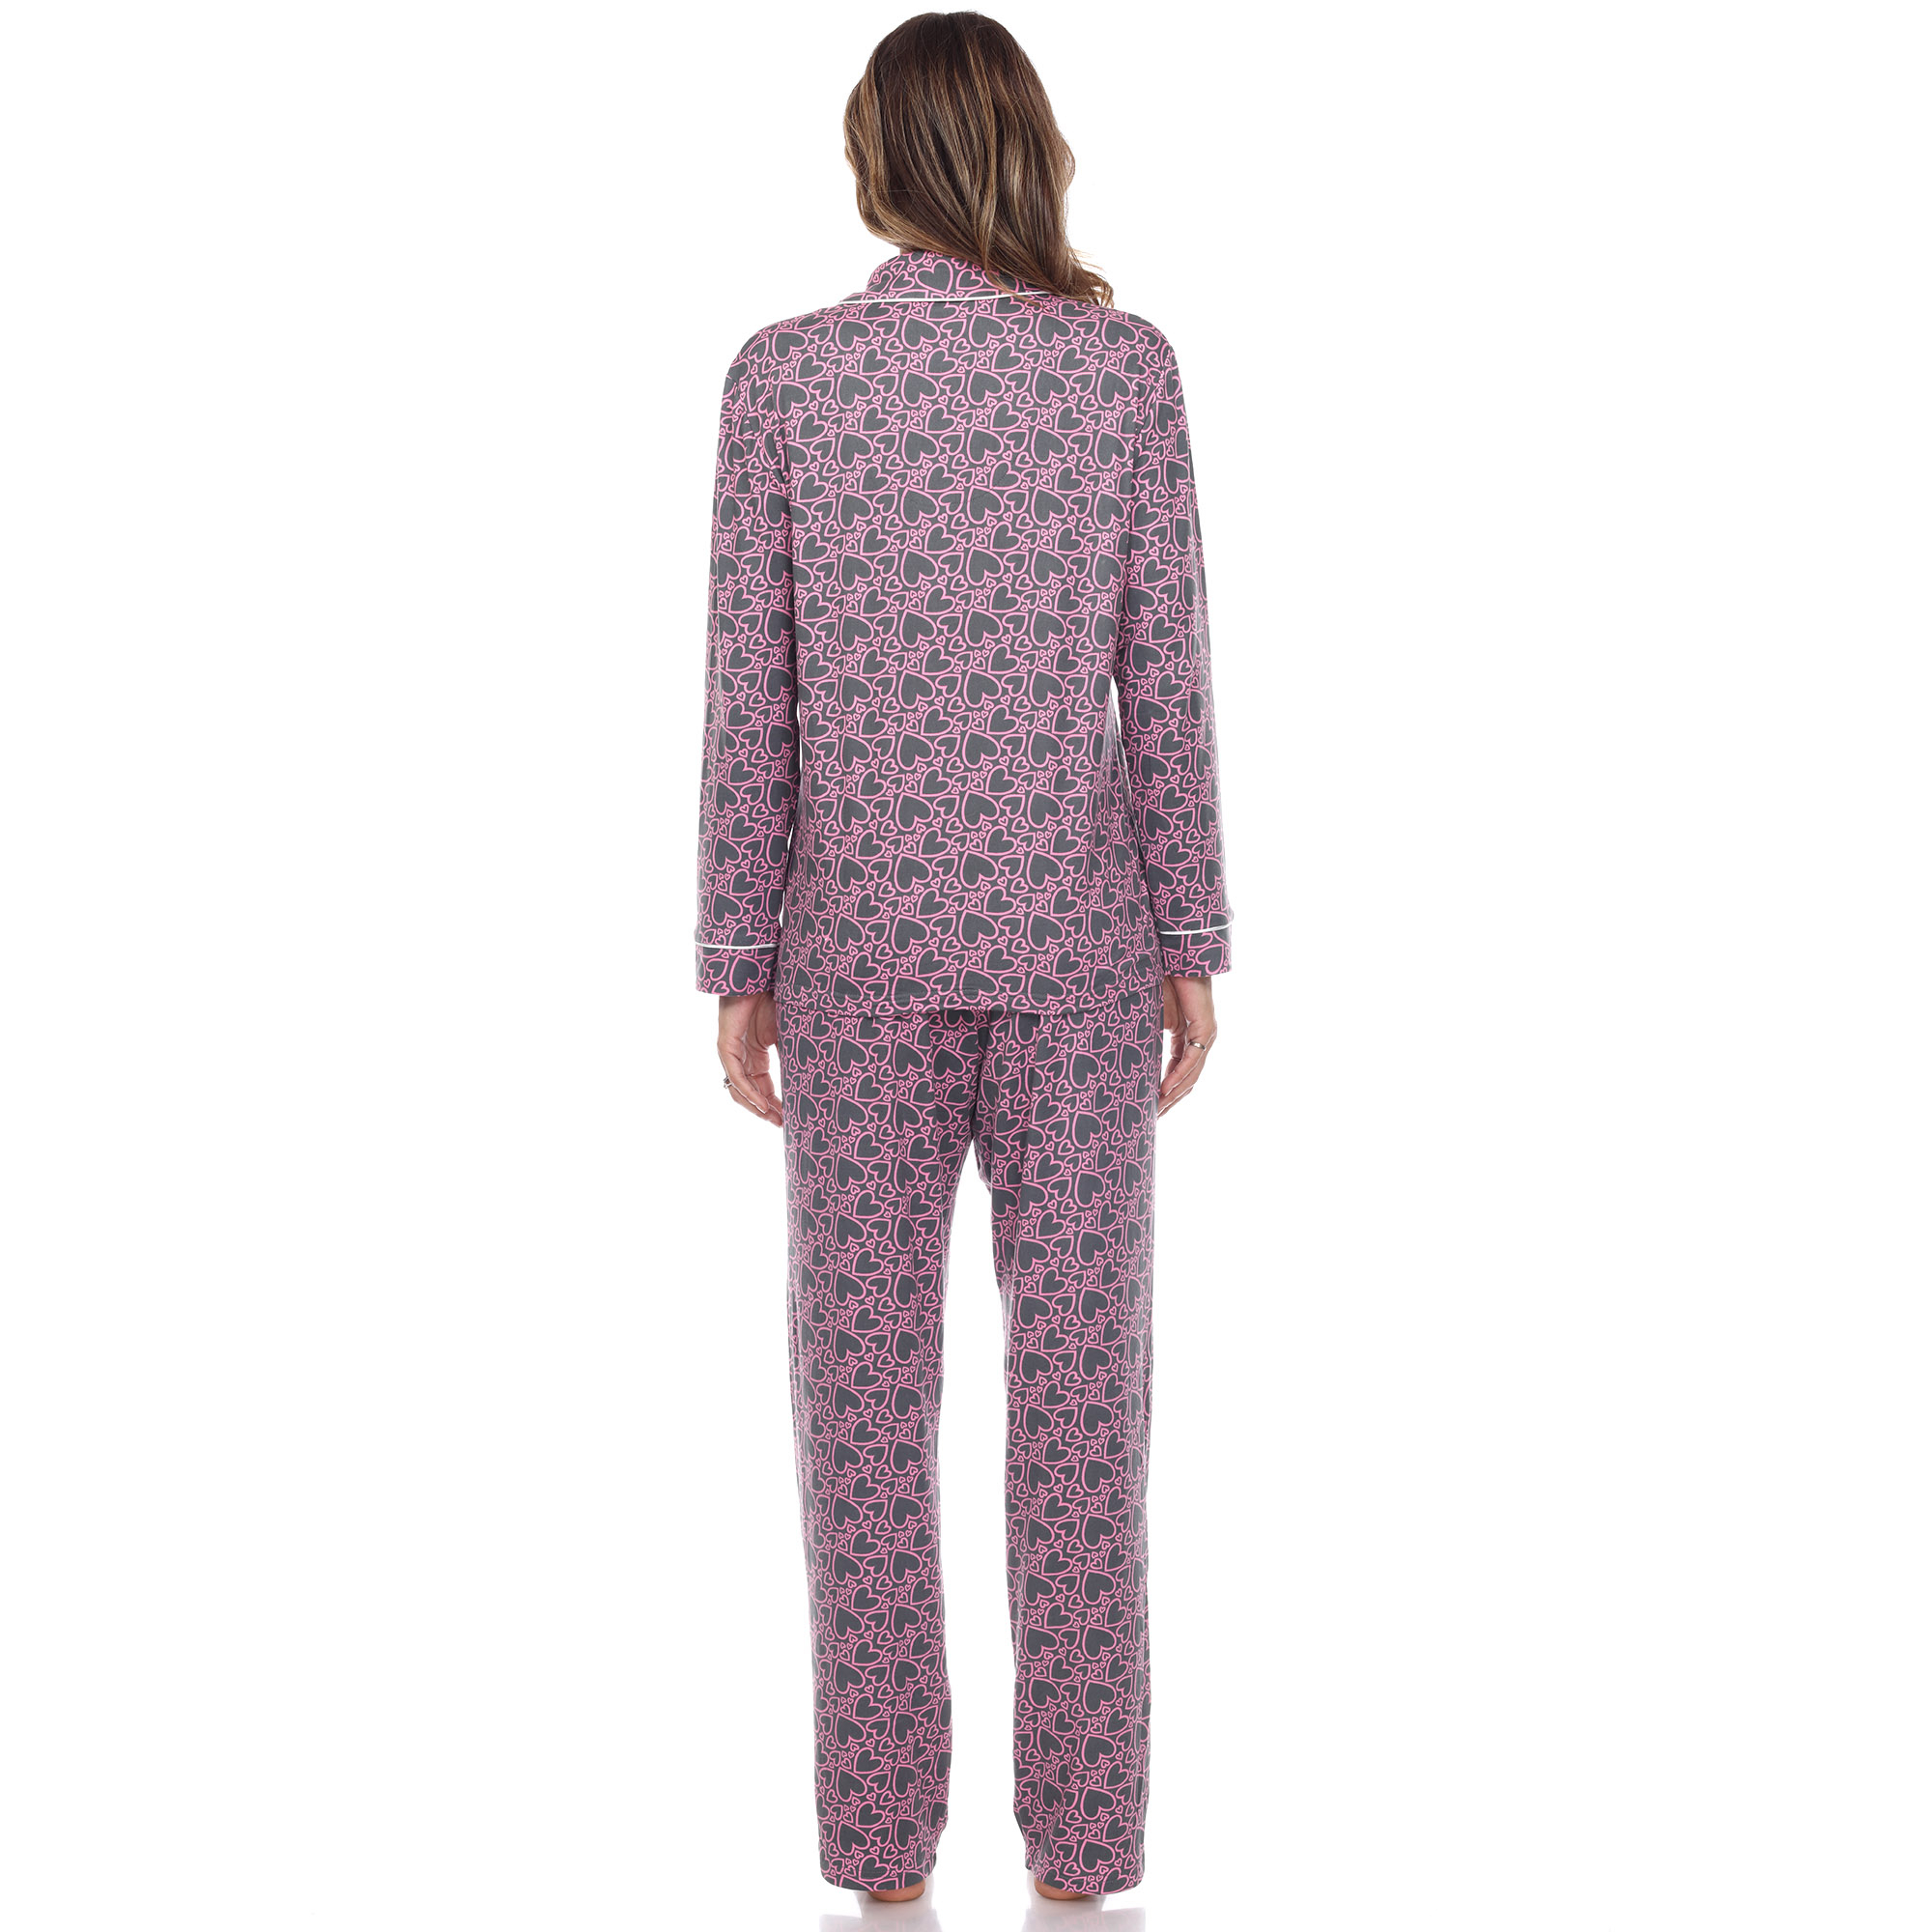 White Mark Women's Long Sleeve Hearts Pajama Set - Pink, 1X